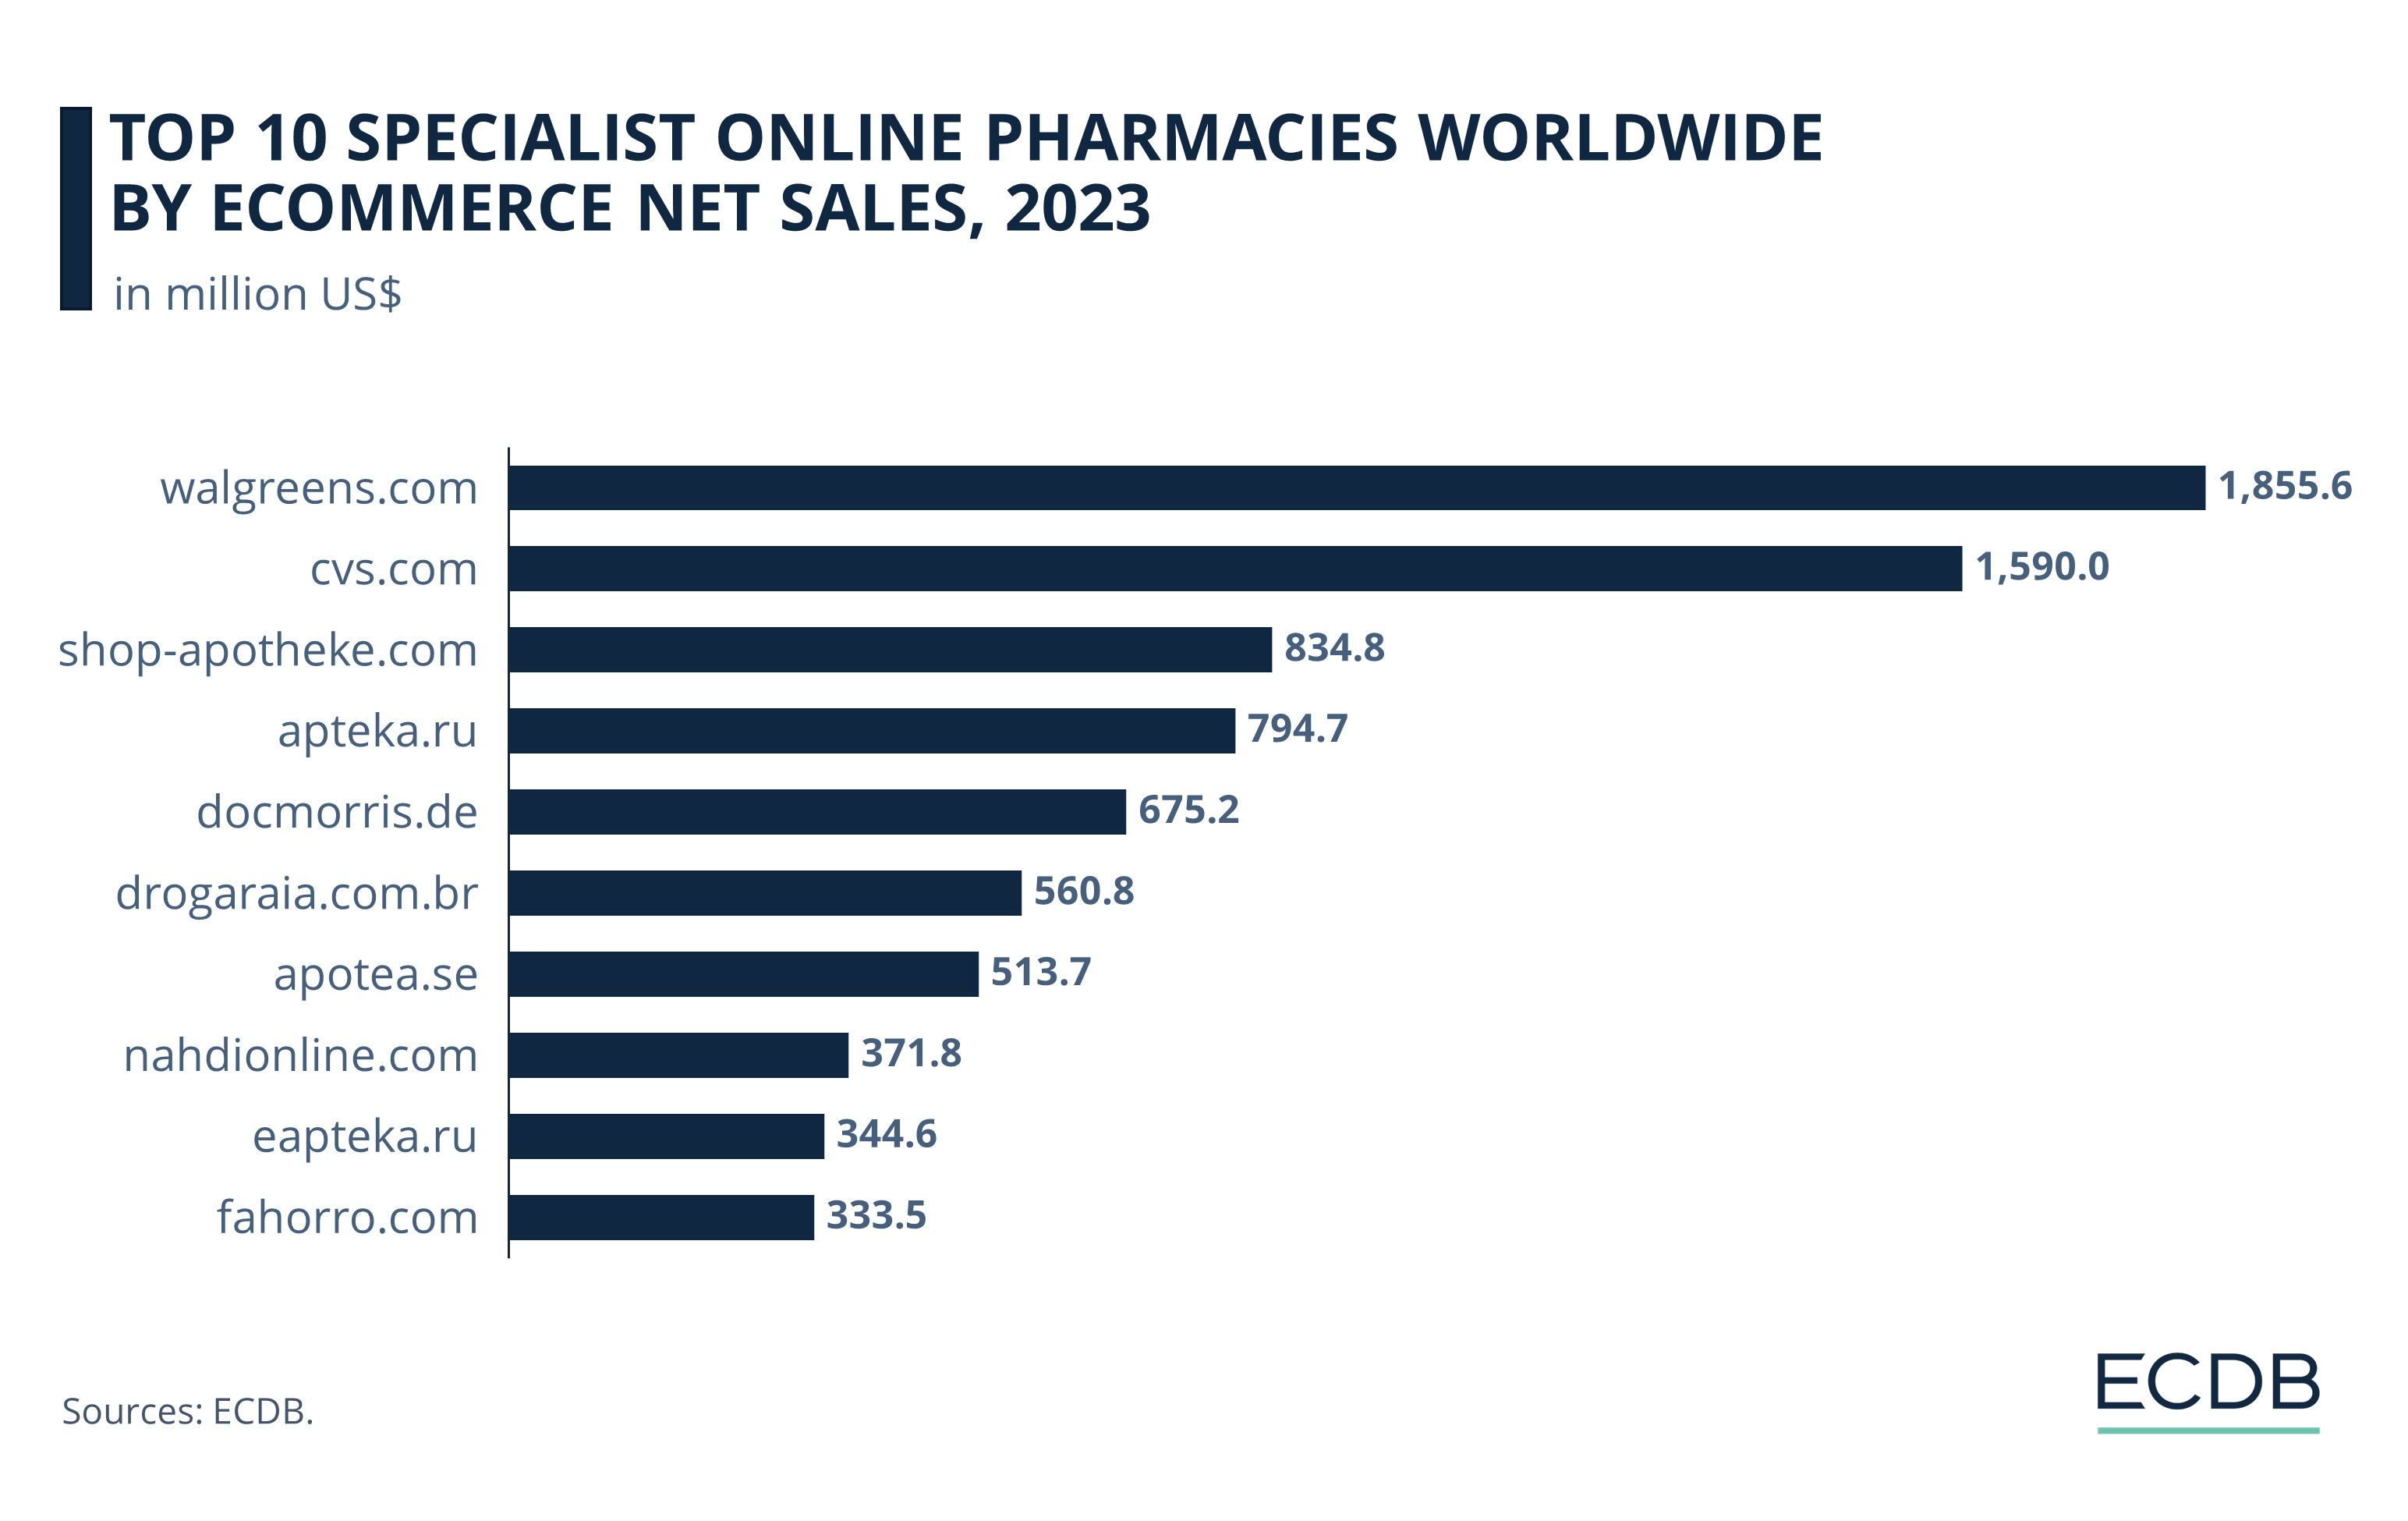 Top 10 Specialist Online Pharmacies Worldwide by eCommerce Net Sales, 2022